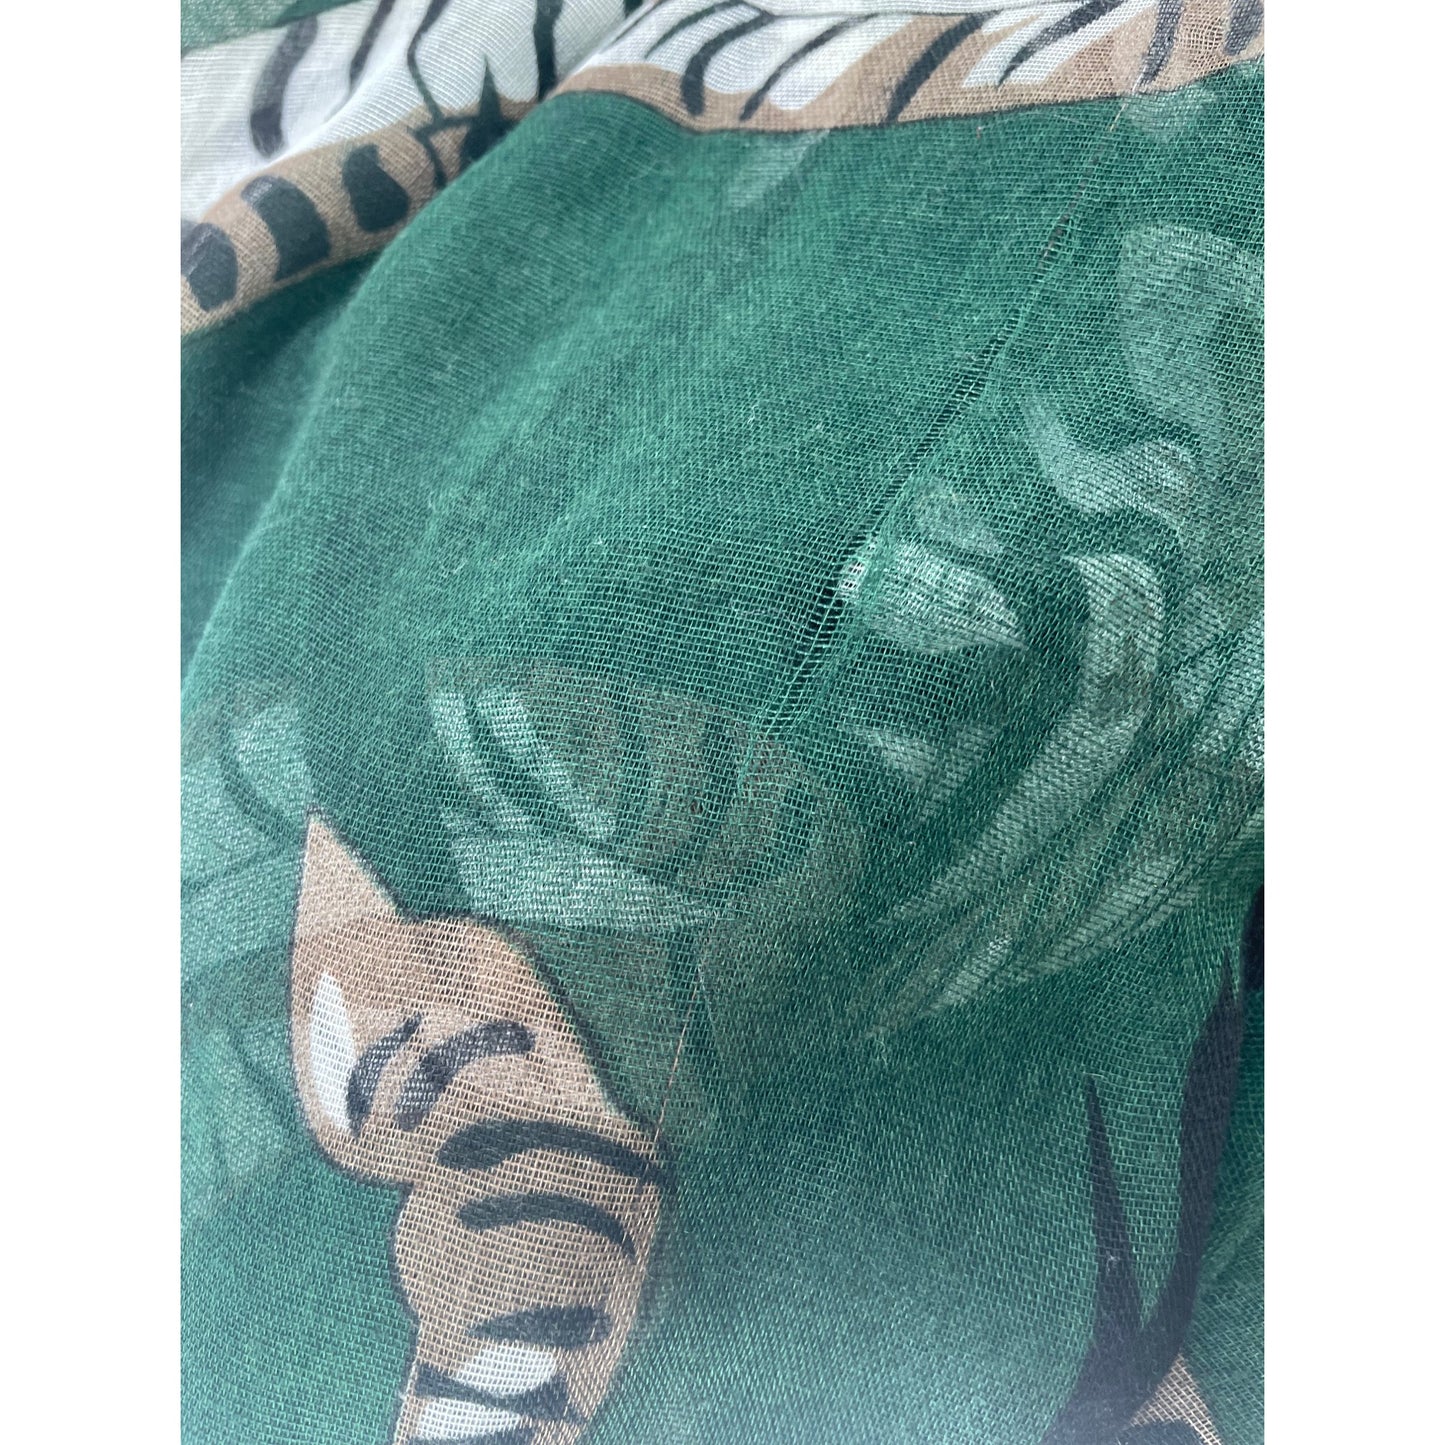 Women's Green, Brown, White & Black Zebra Print Large Sheer Scarf